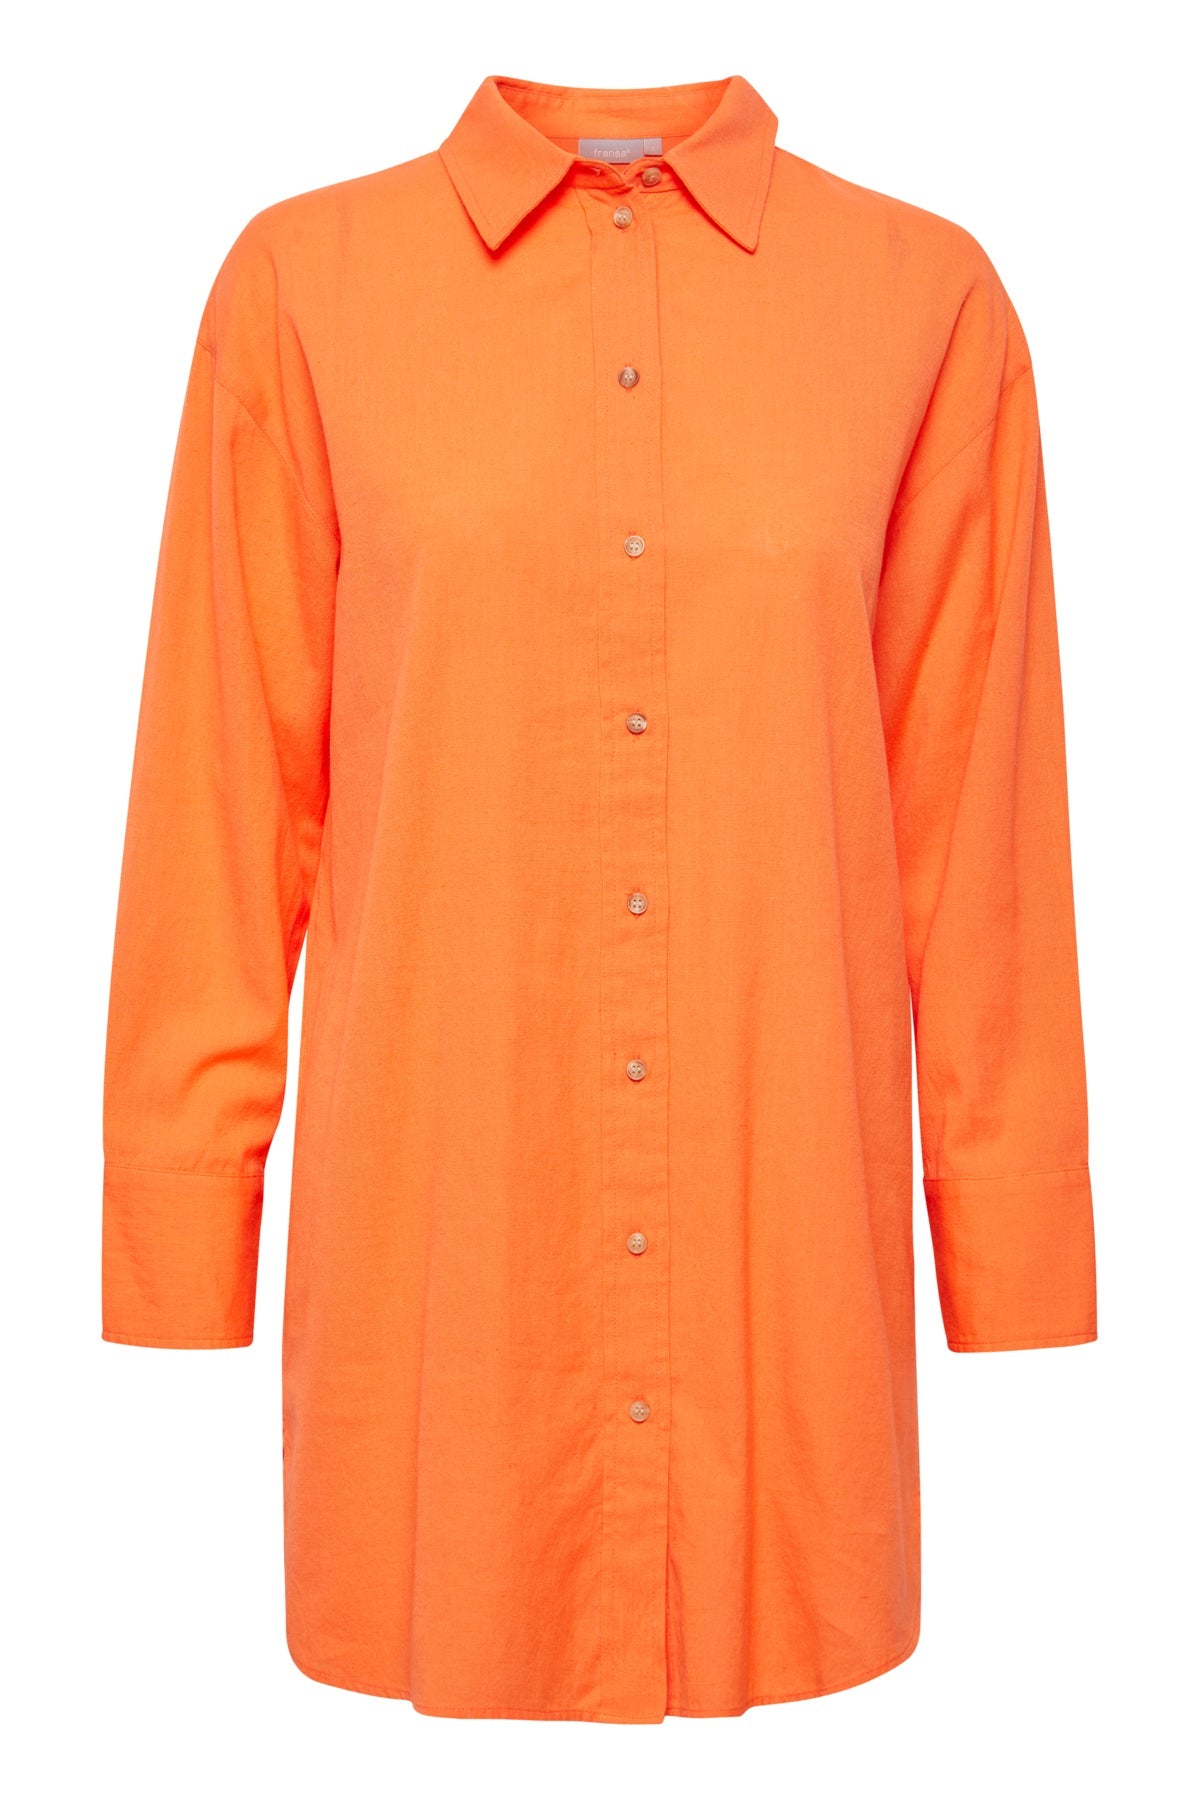 *Frmaddie Tunic Shirt Orange*